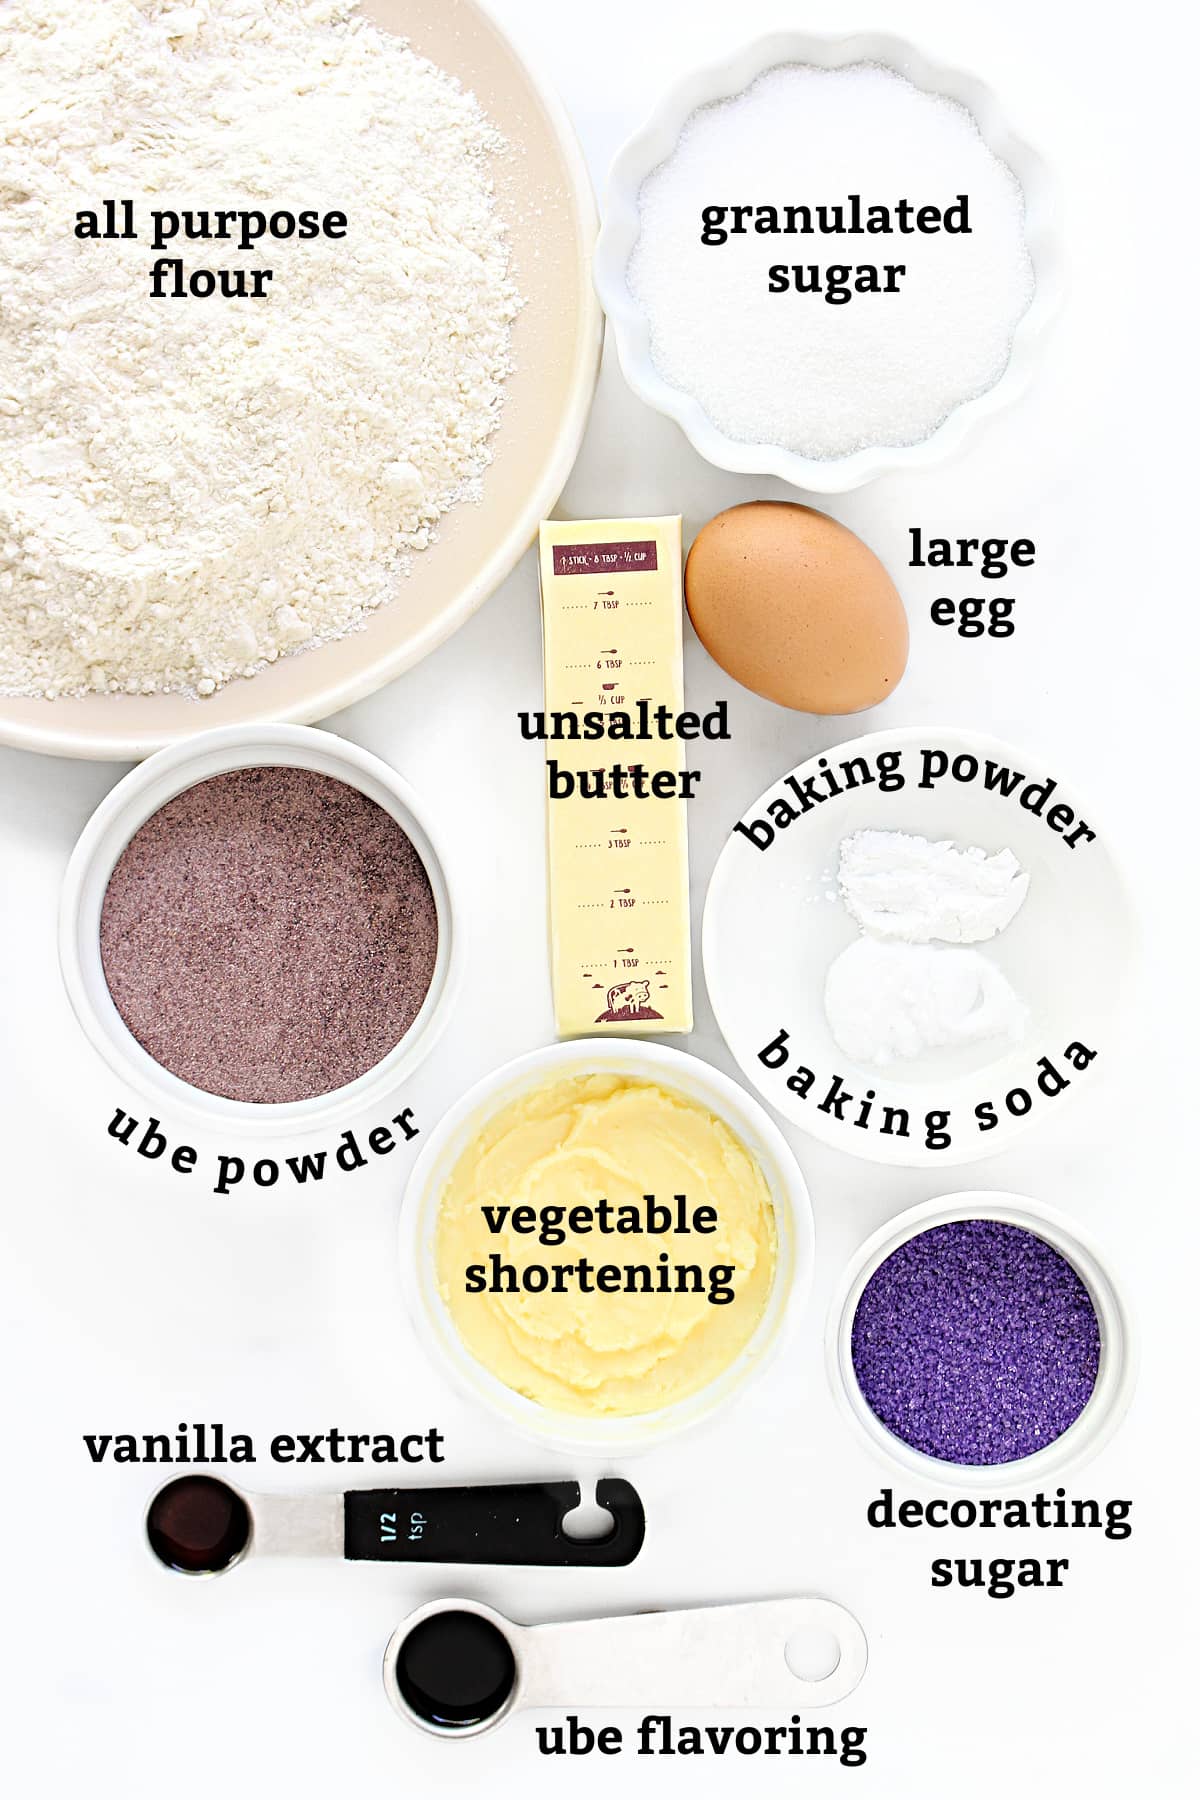 Ingredients: flour, sugar, egg, butter,  shortening, ube powder/flavor, vanilla, baking powder, baking soda, decorating sugar.